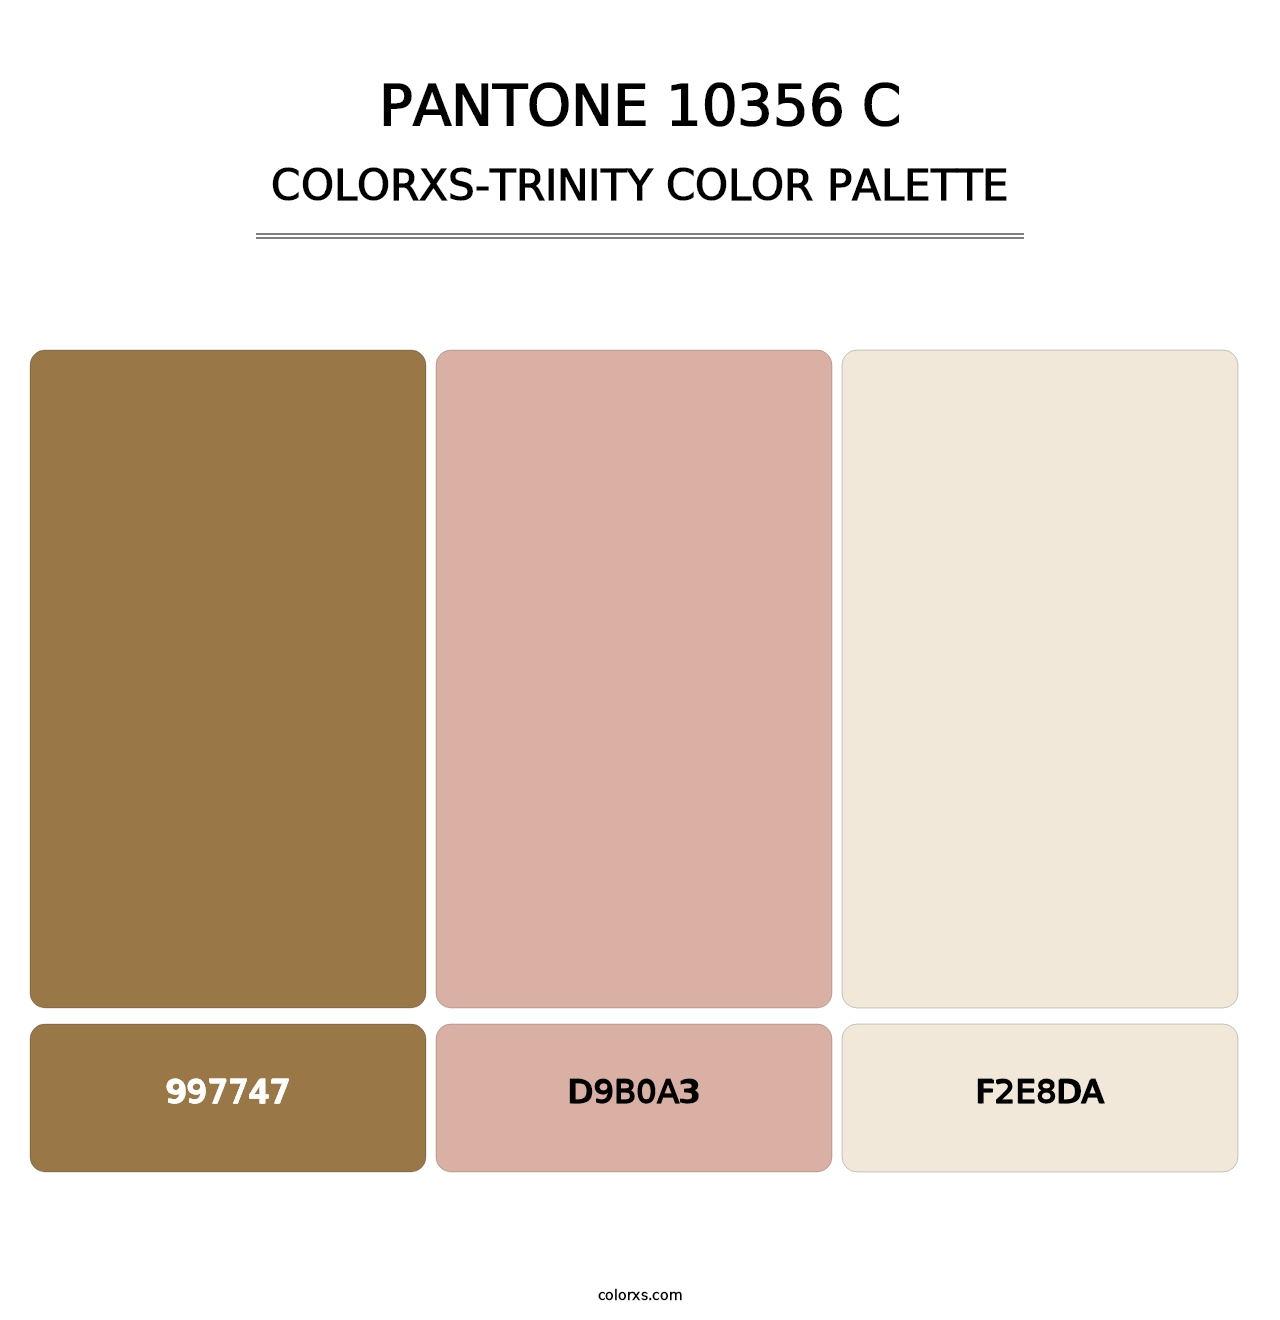 PANTONE 10356 C - Colorxs Trinity Palette